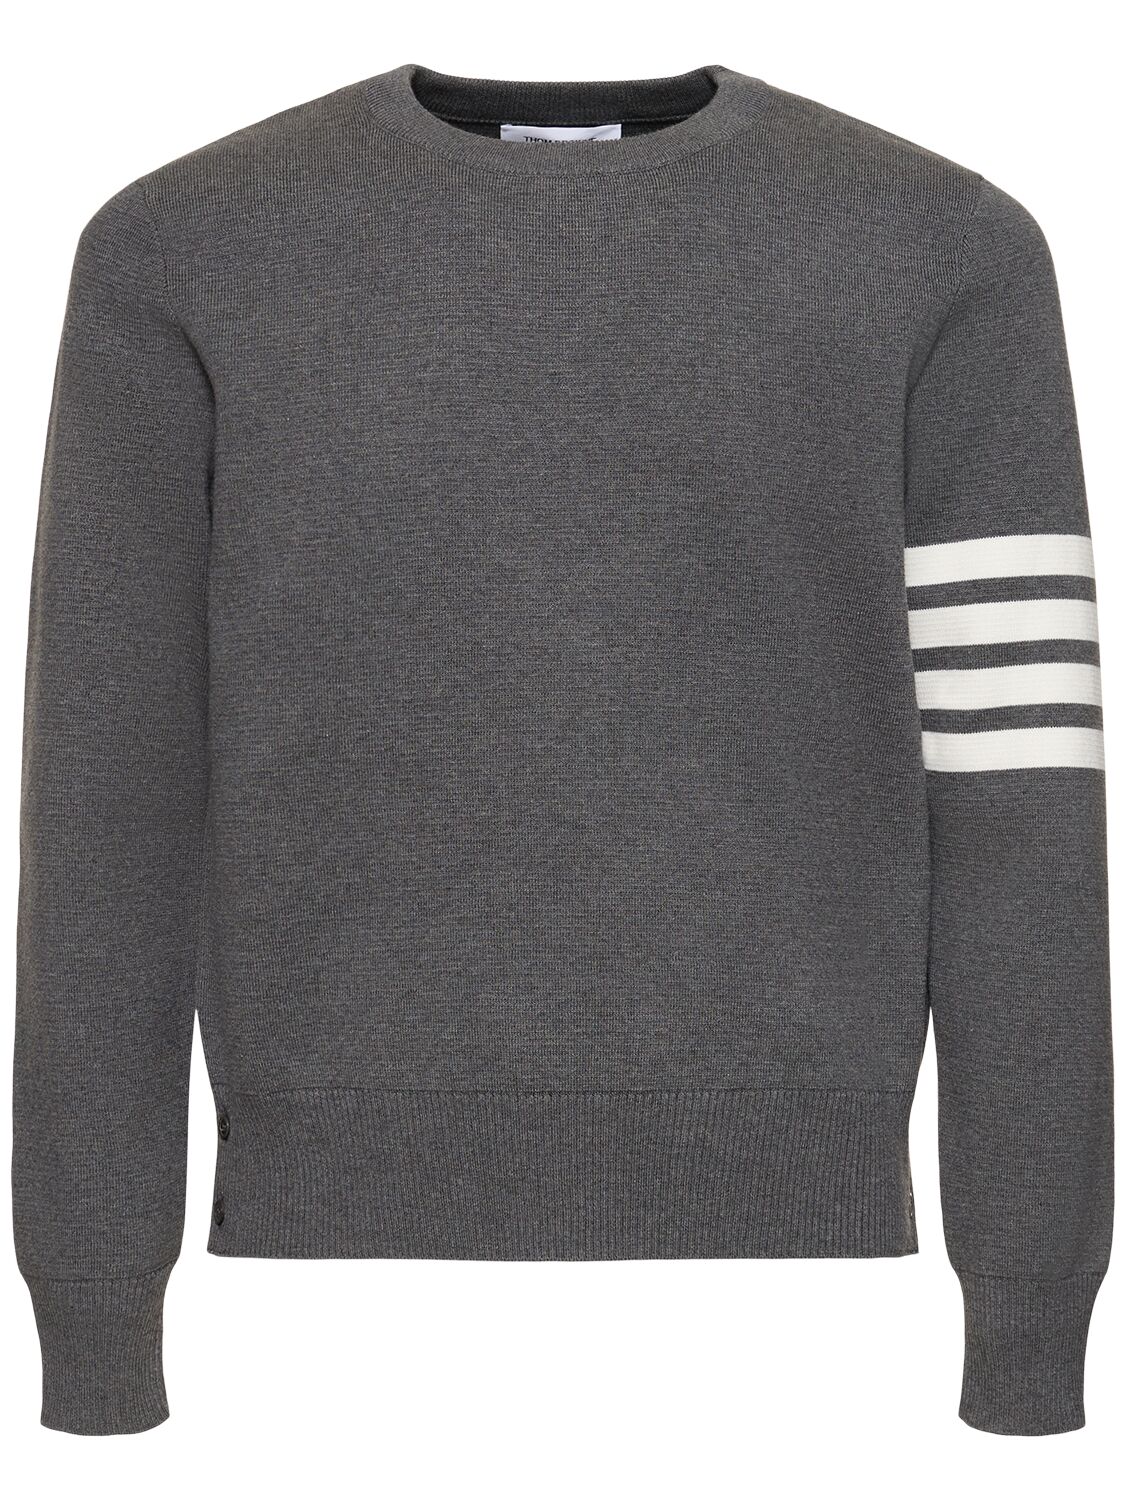 Thom Browne Milano Stitch Cotton Crewneck Sweater In Med Grey